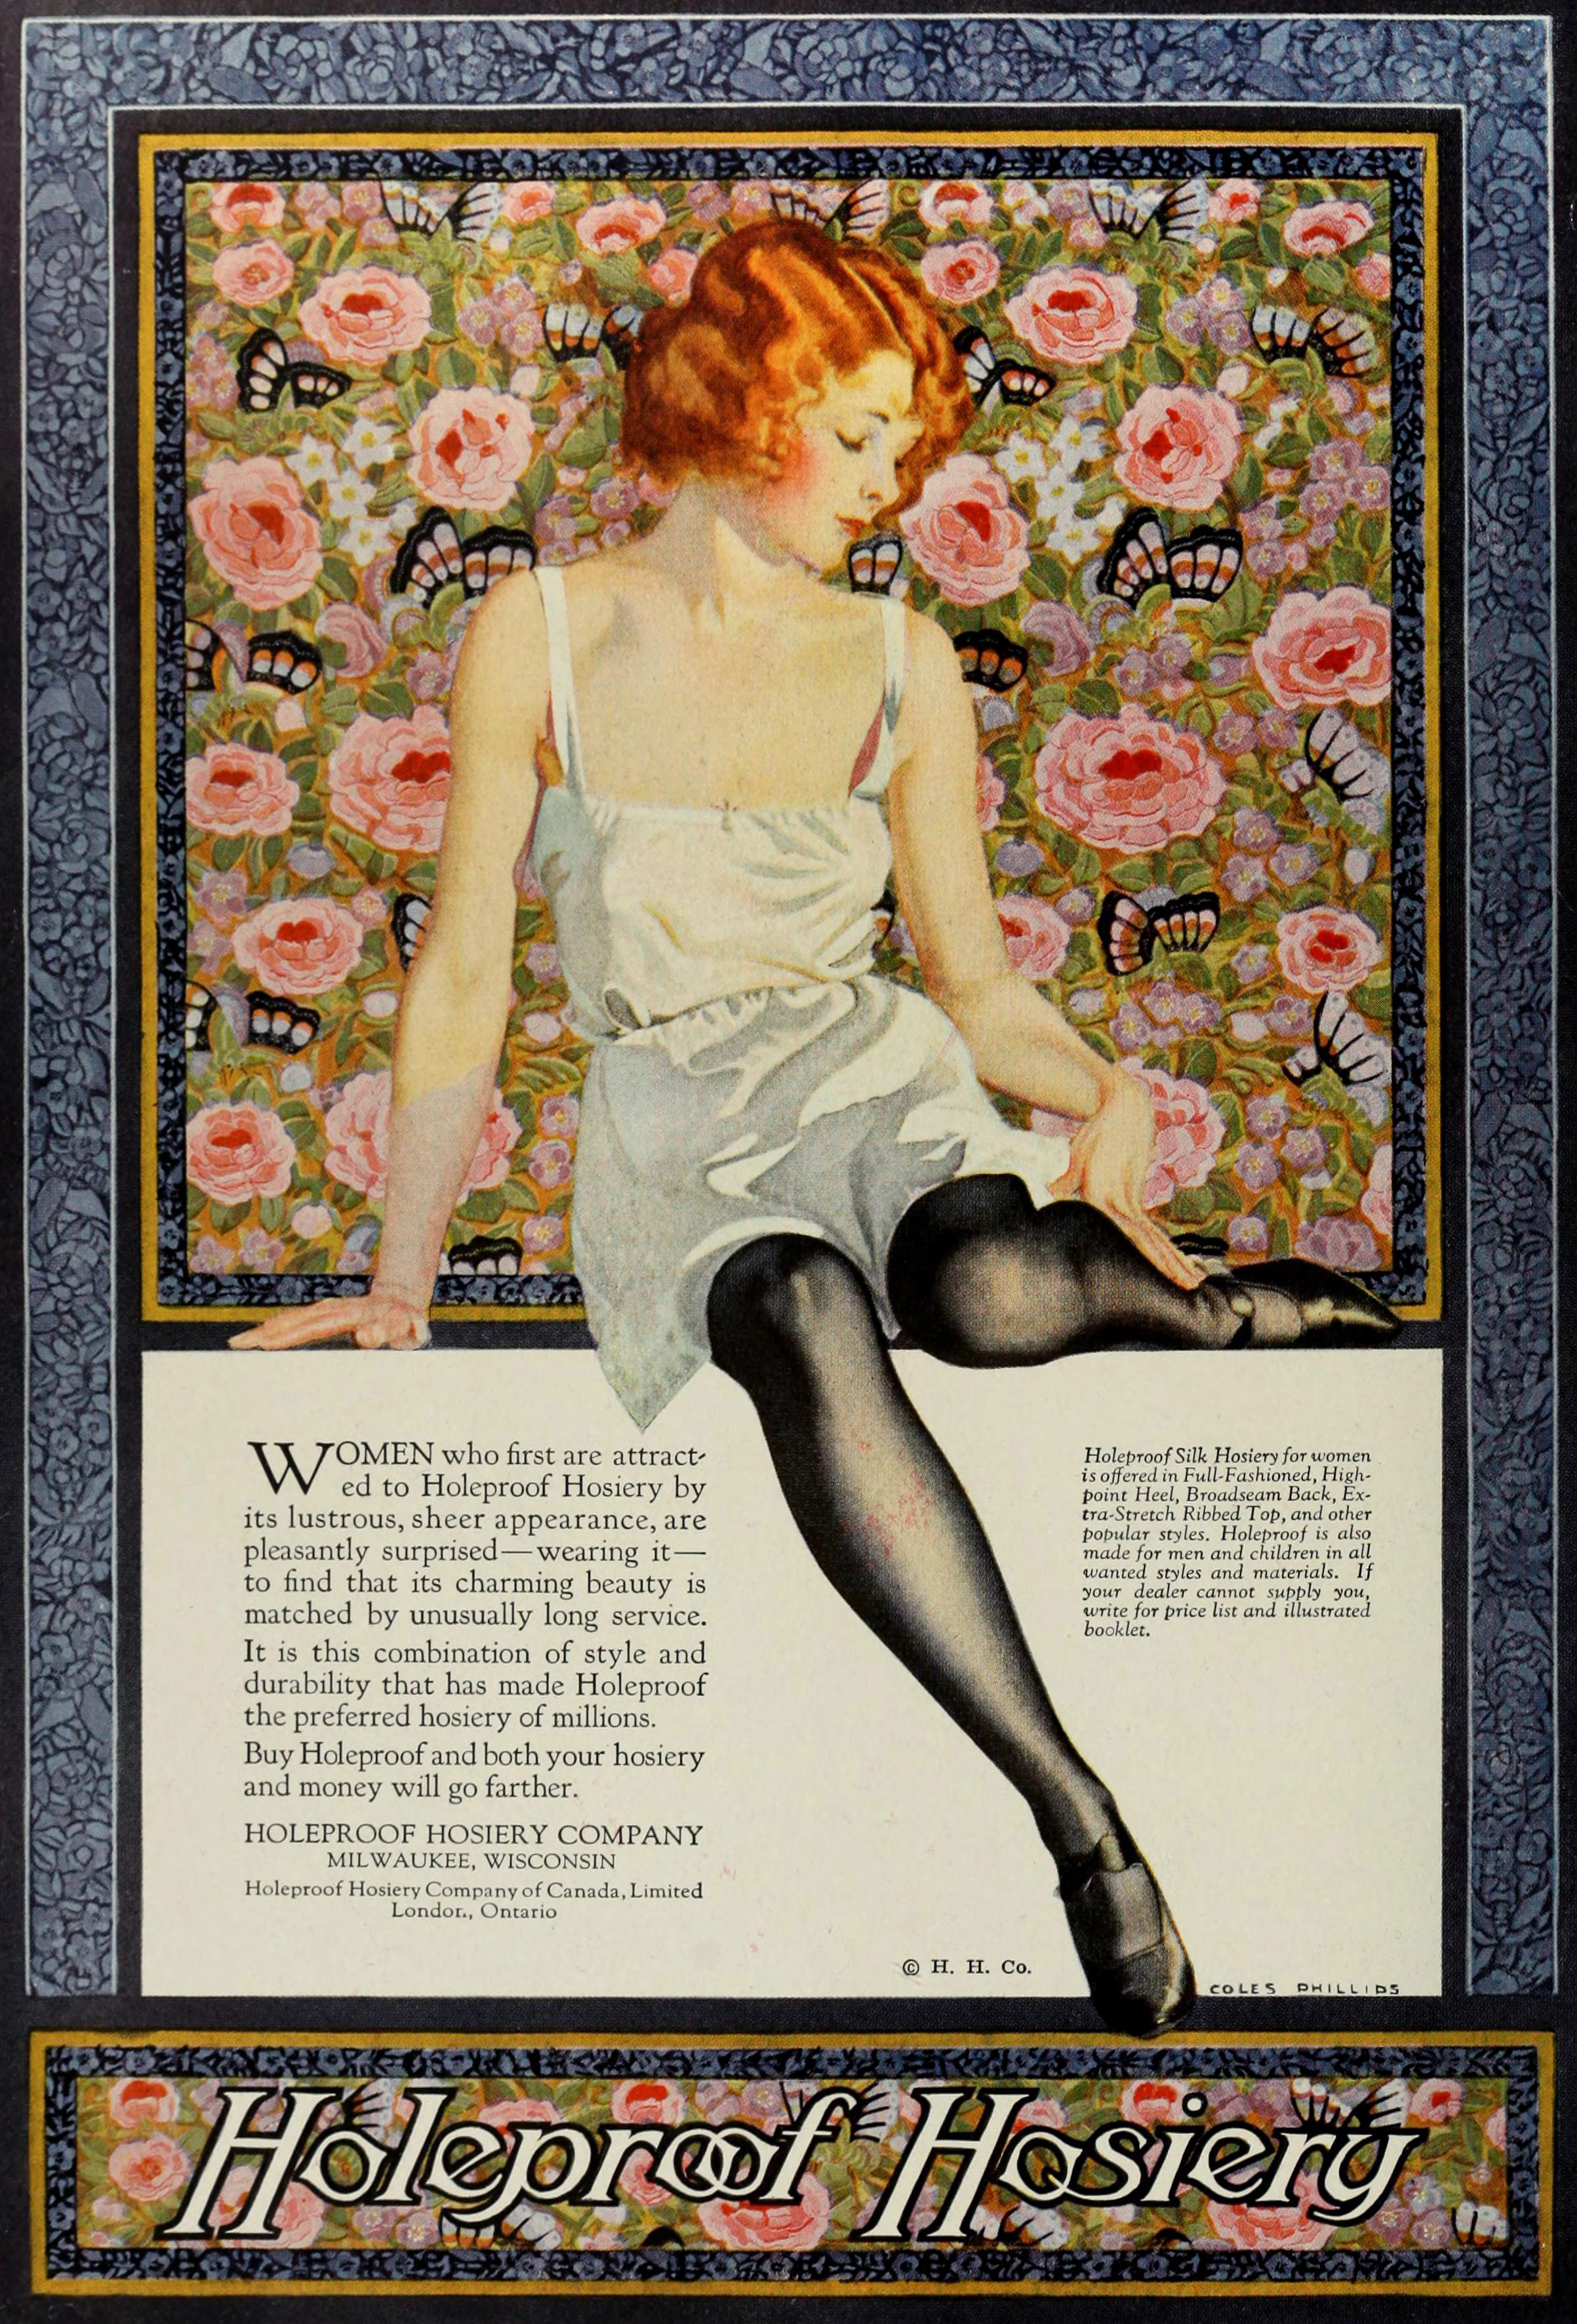 Holeproof Hosery Company Advertisement Circa 1923